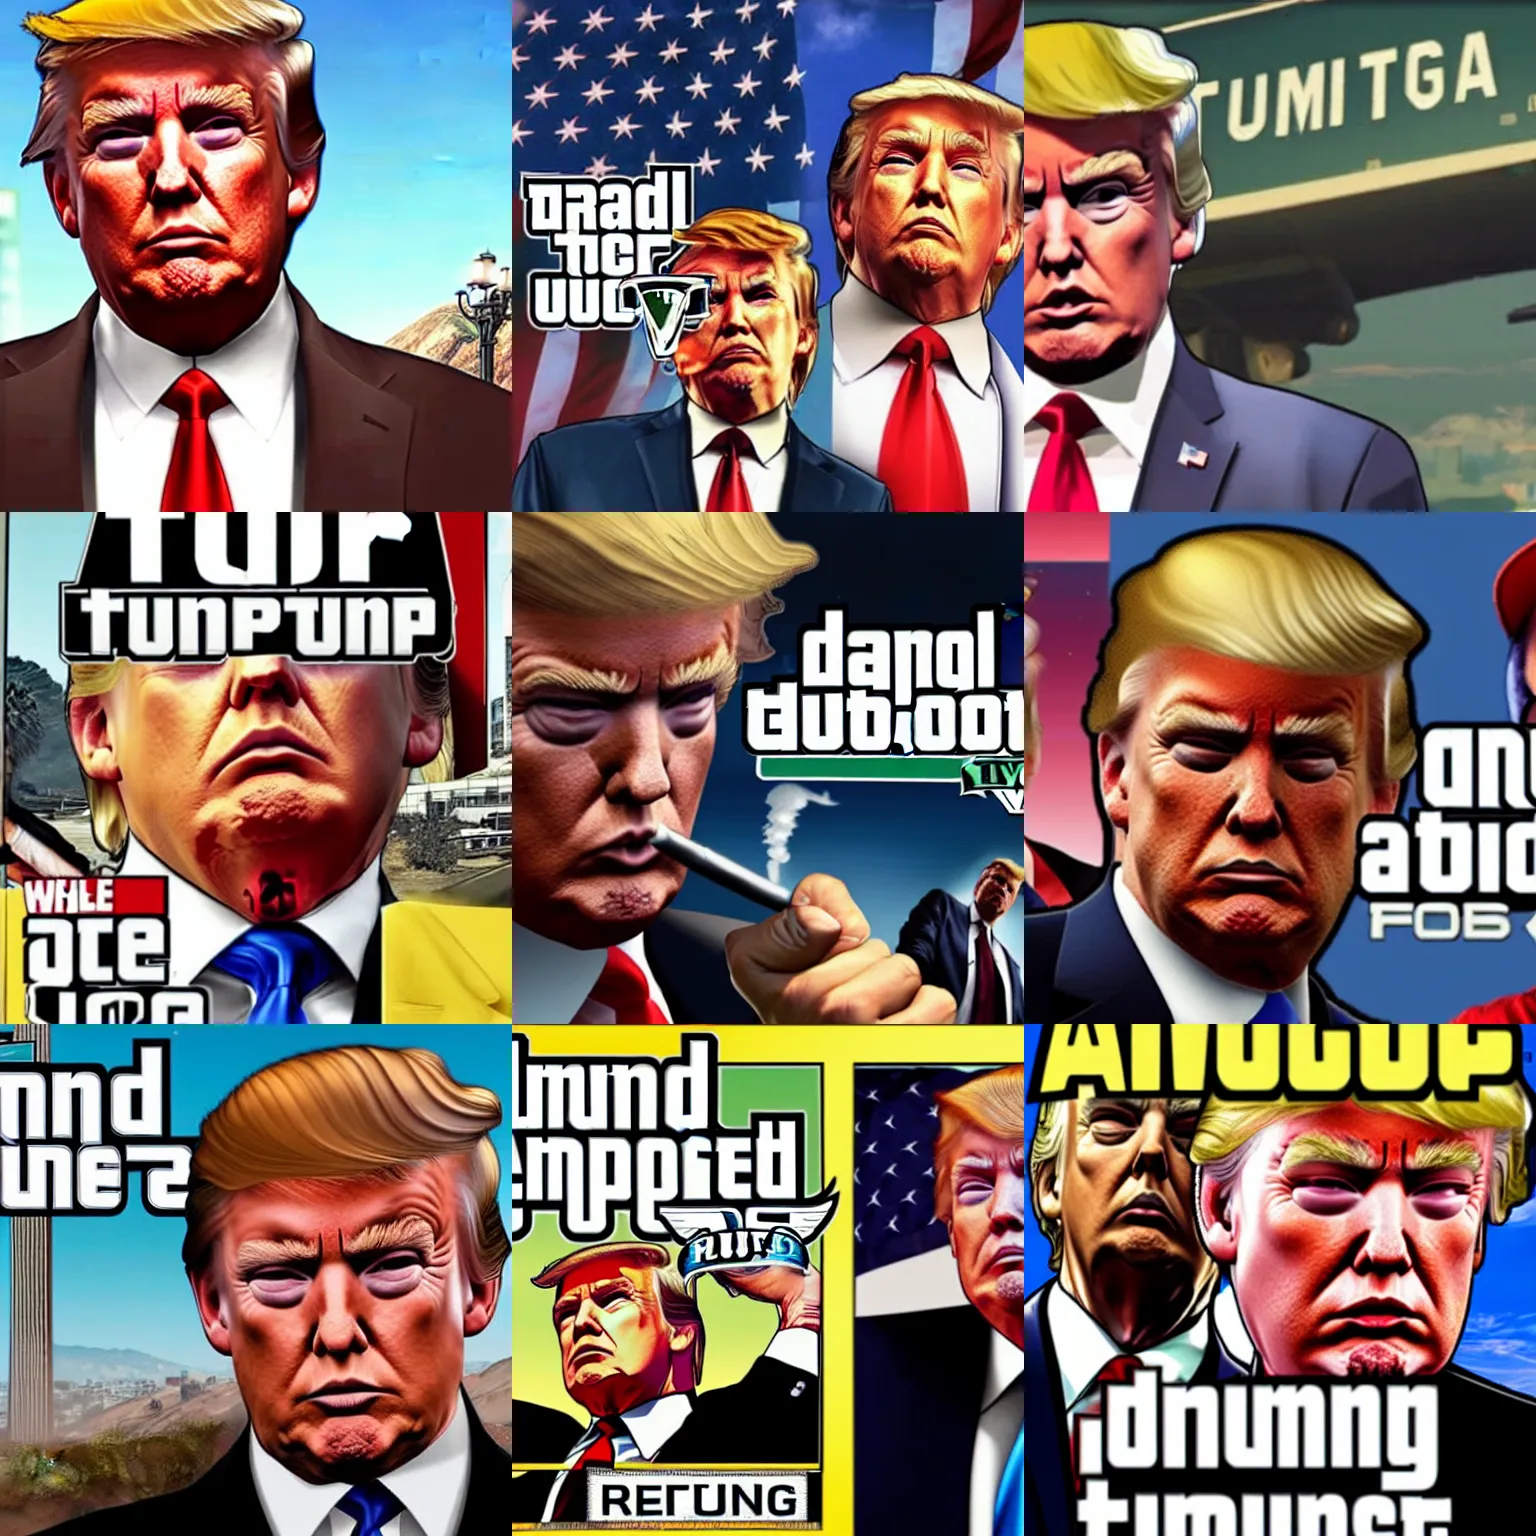 Prompt: Donald Trump smoking on GTA V cover art